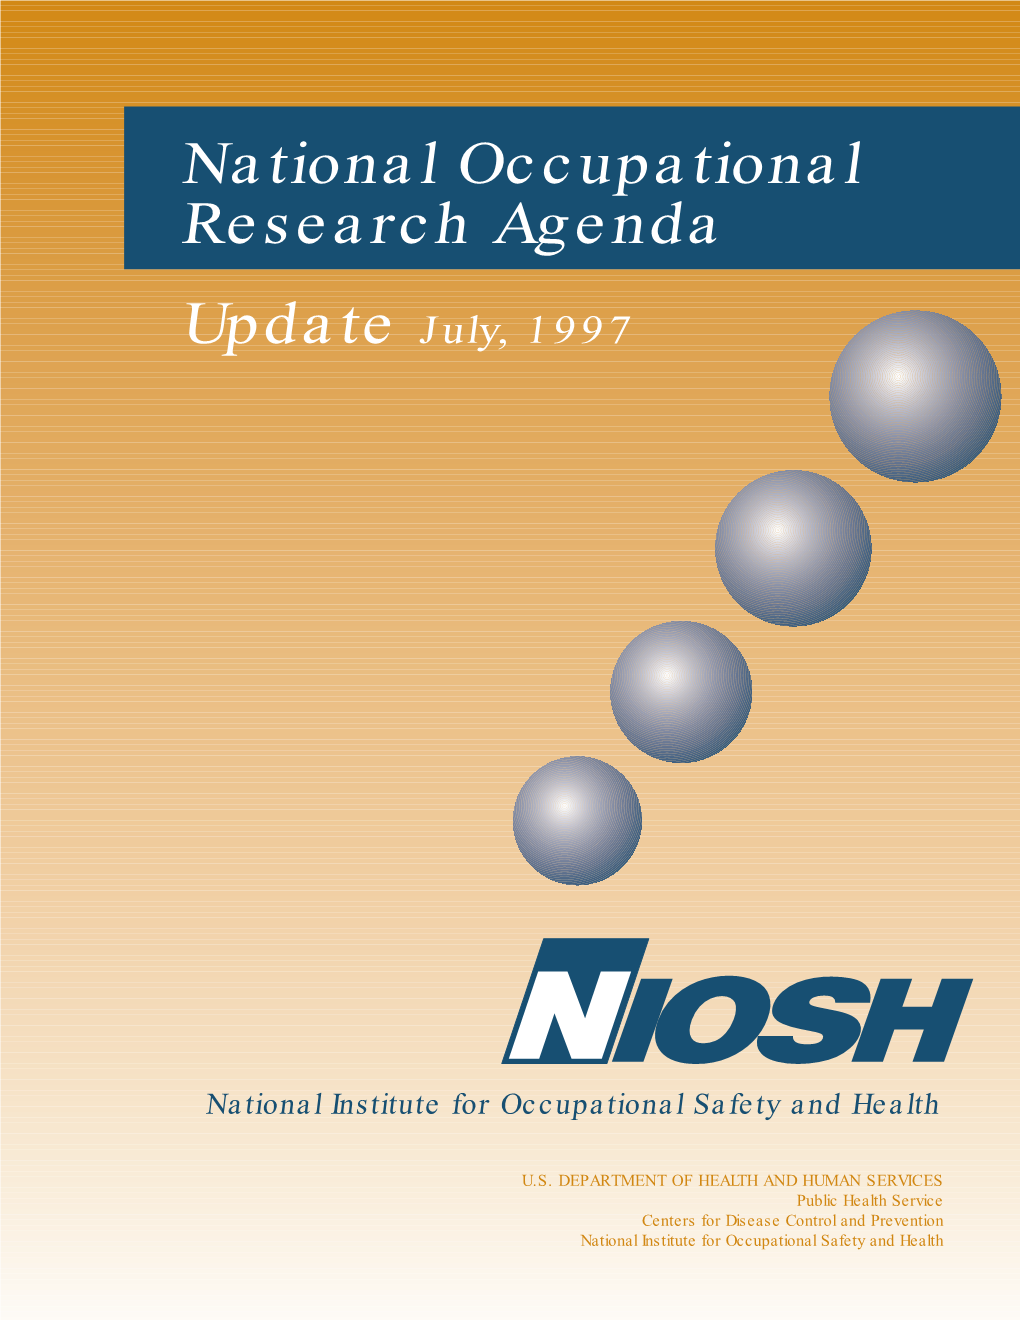 National Occupational Research Agenda Update July, 1997